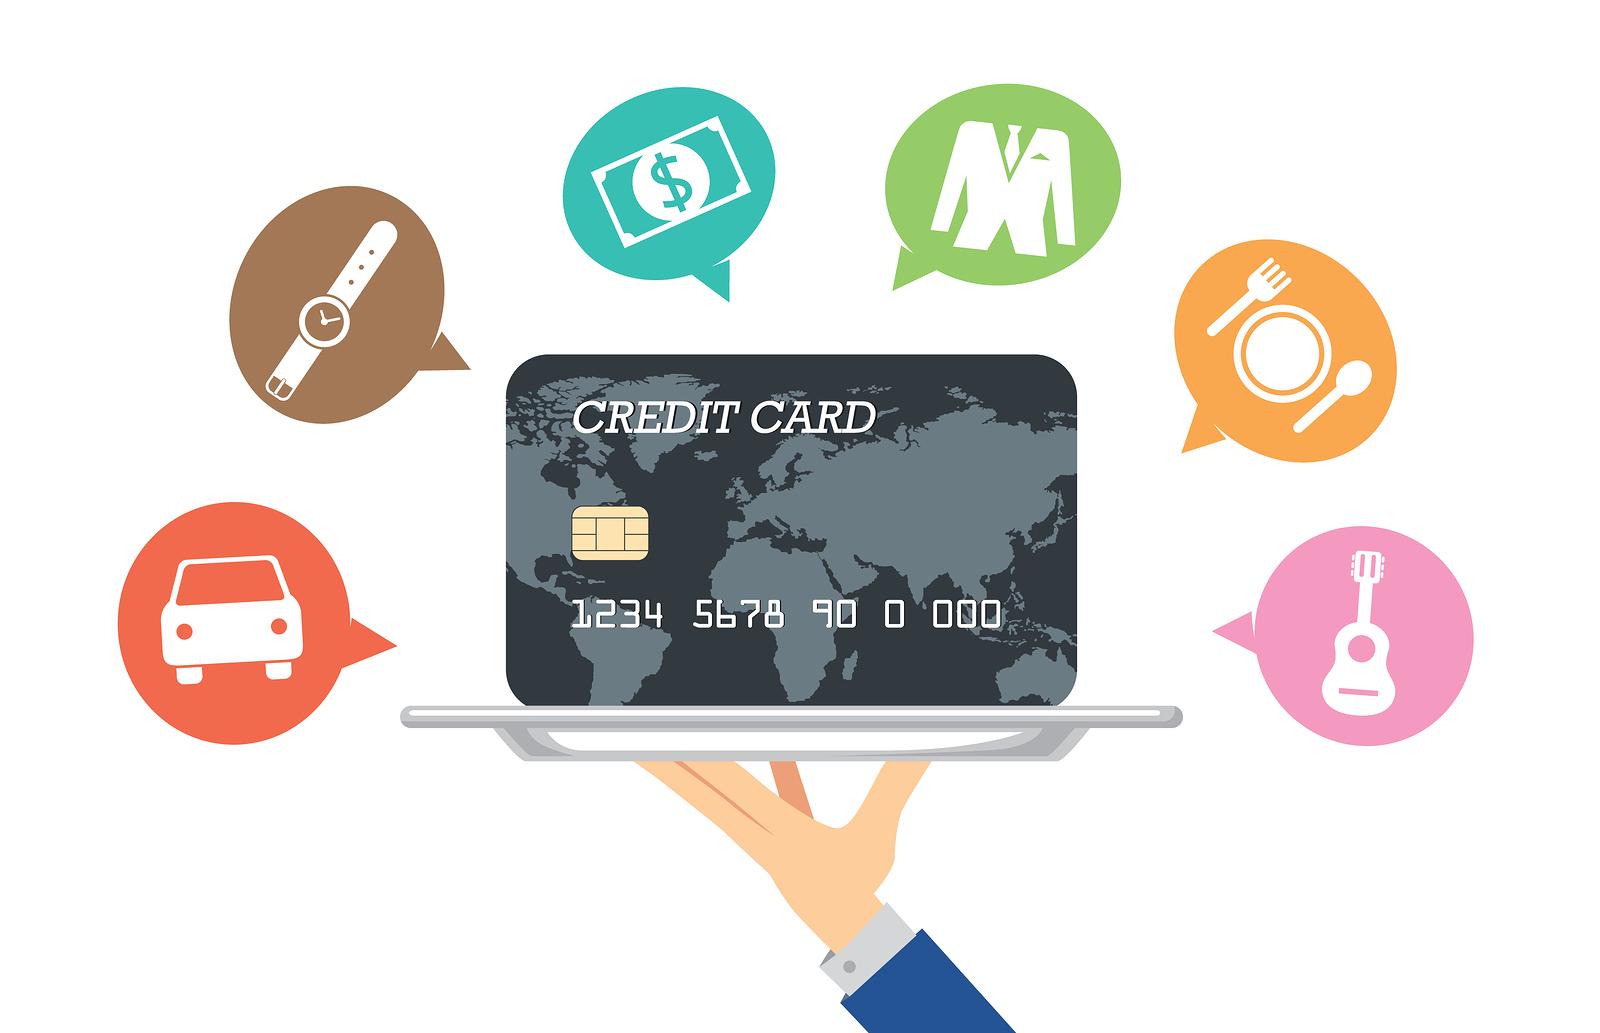 Credit card incentives